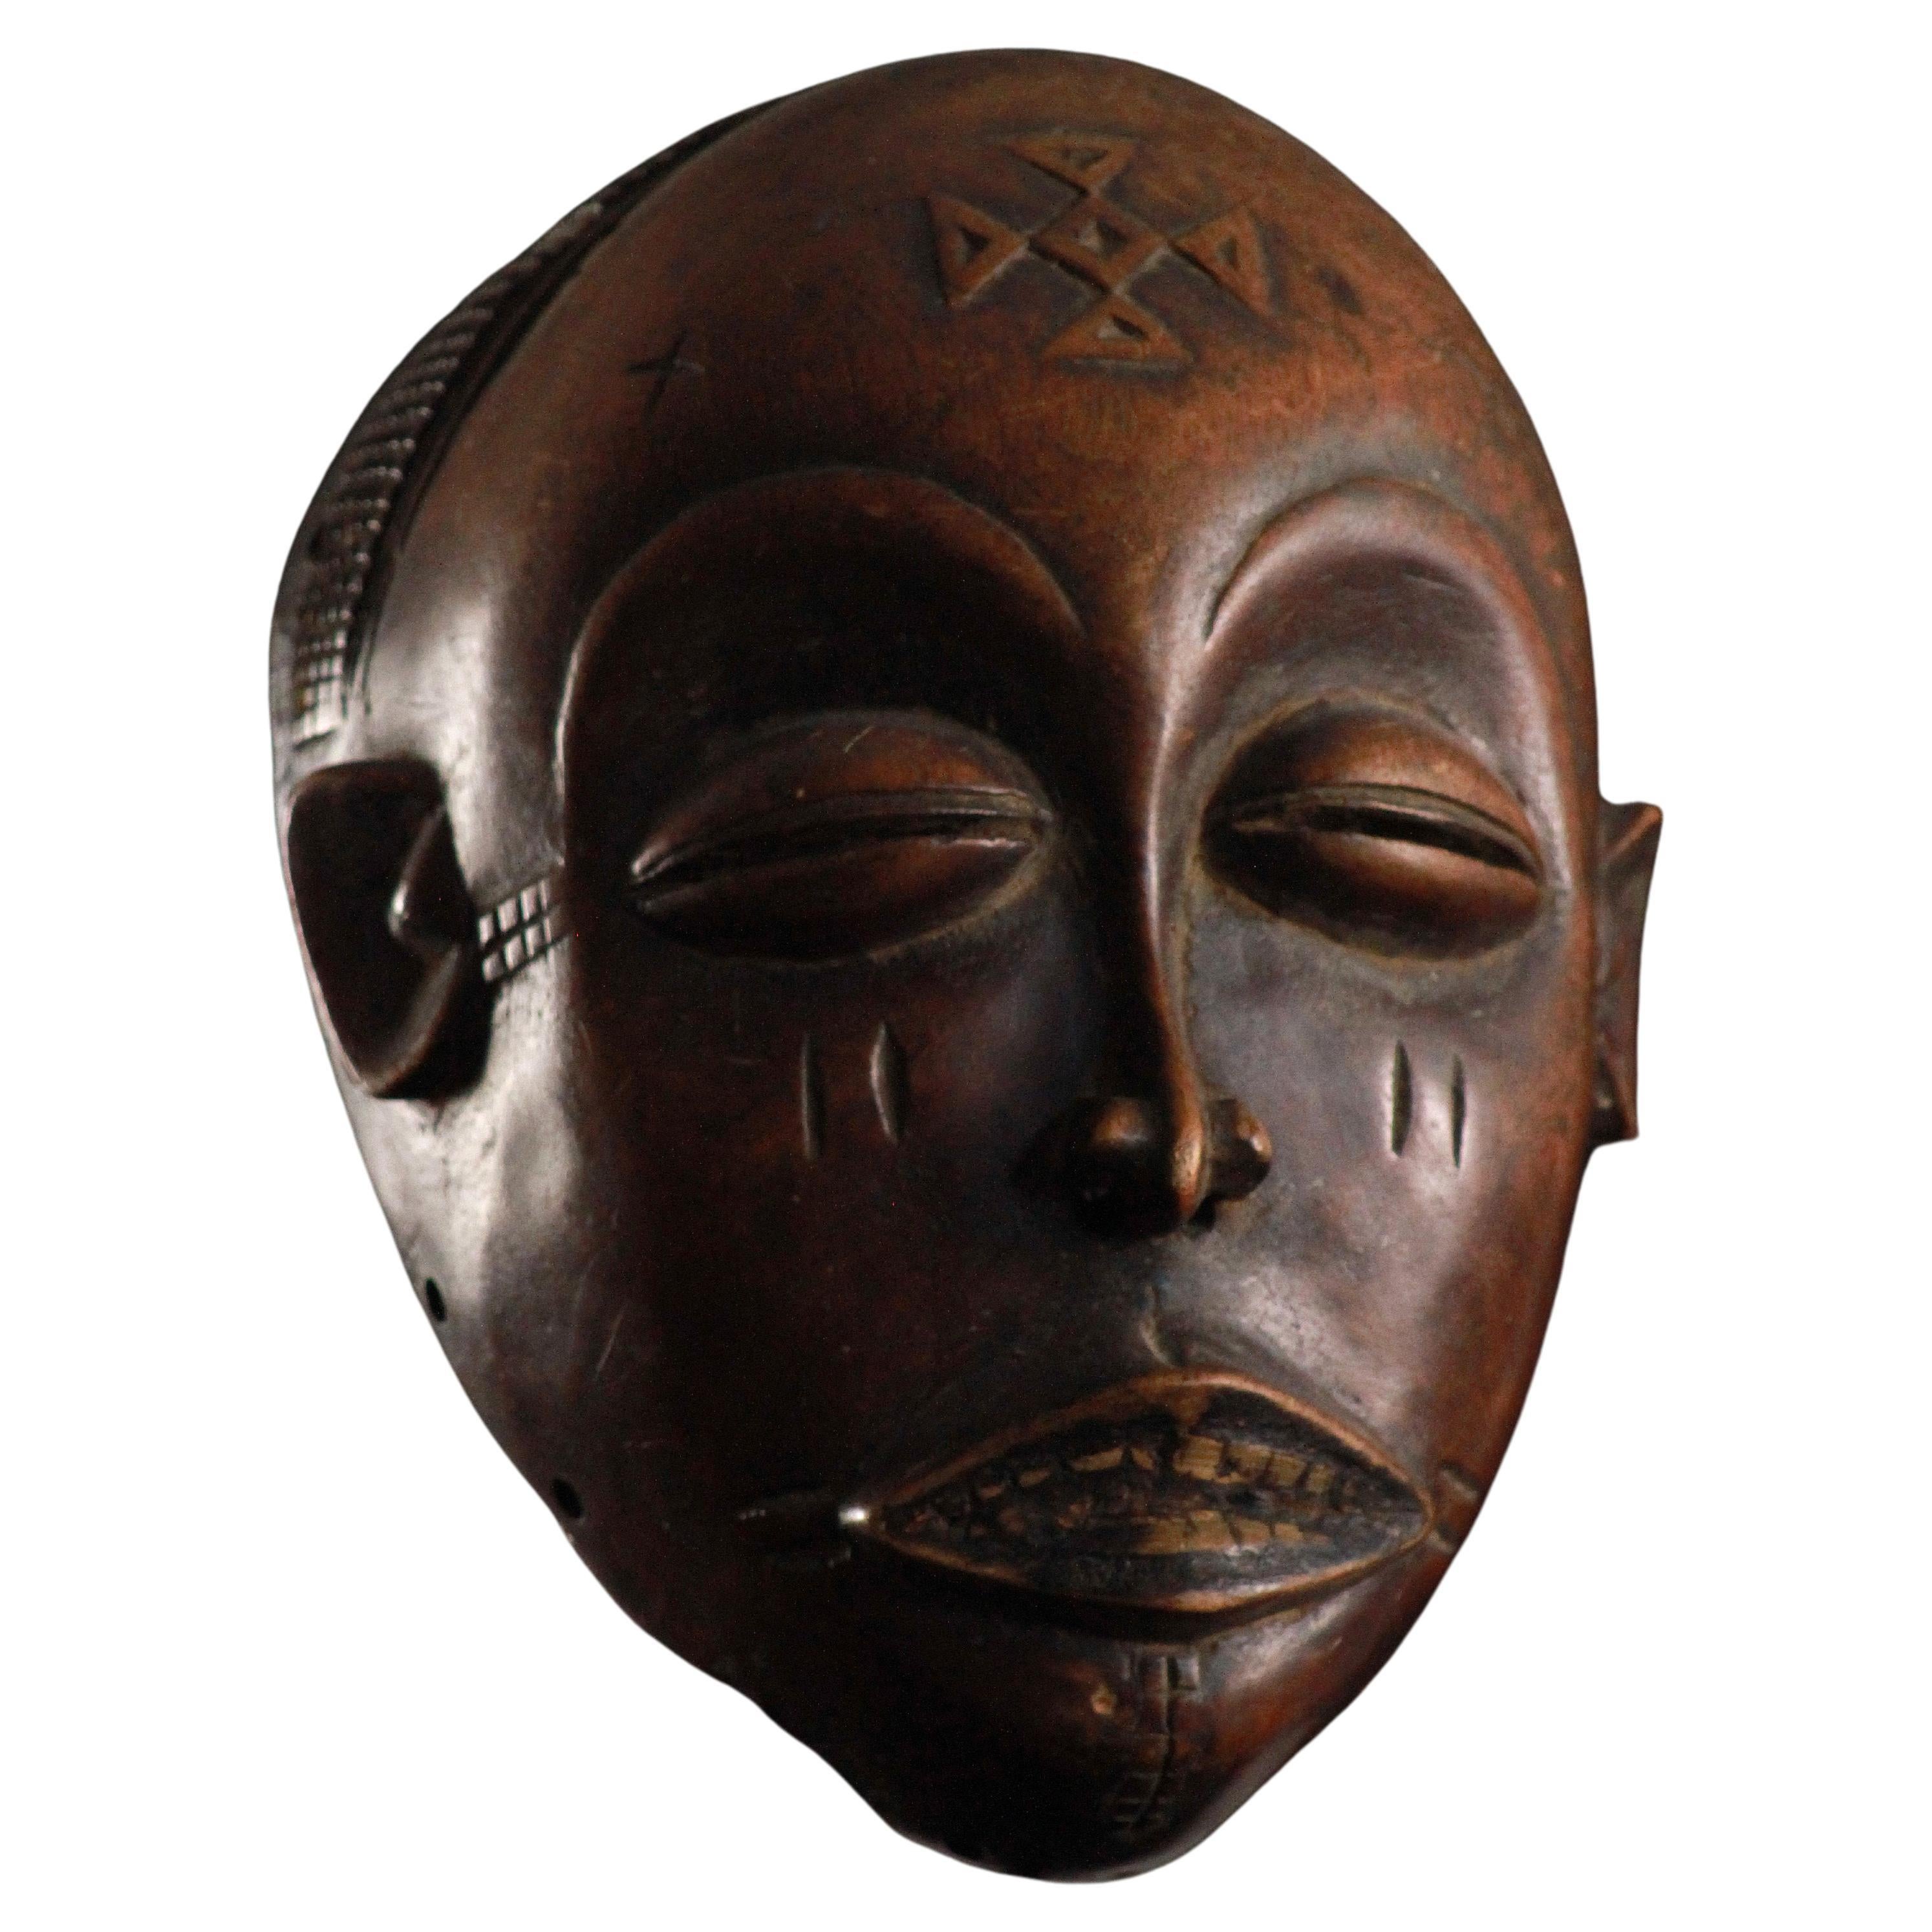 Chokwe Mask, Democratic Republic of The Congo 20th Century